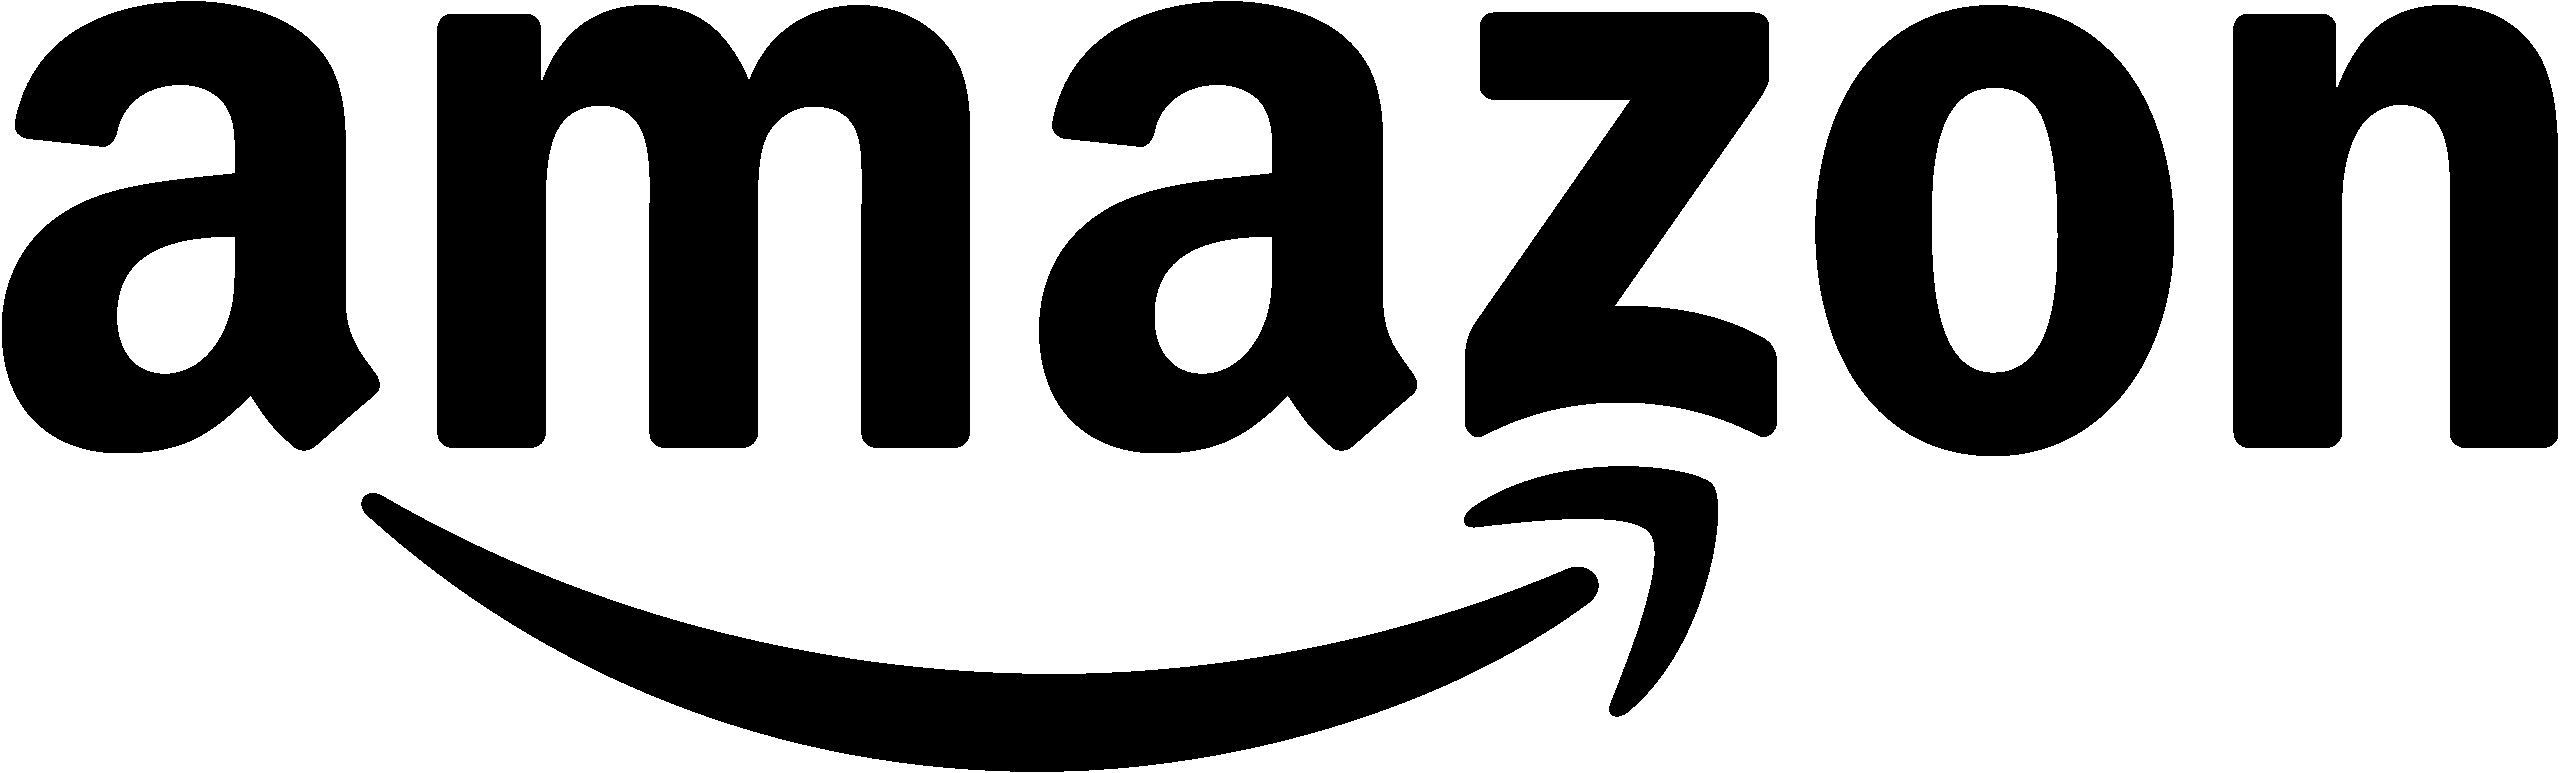 Courage by Design - Amazon logo